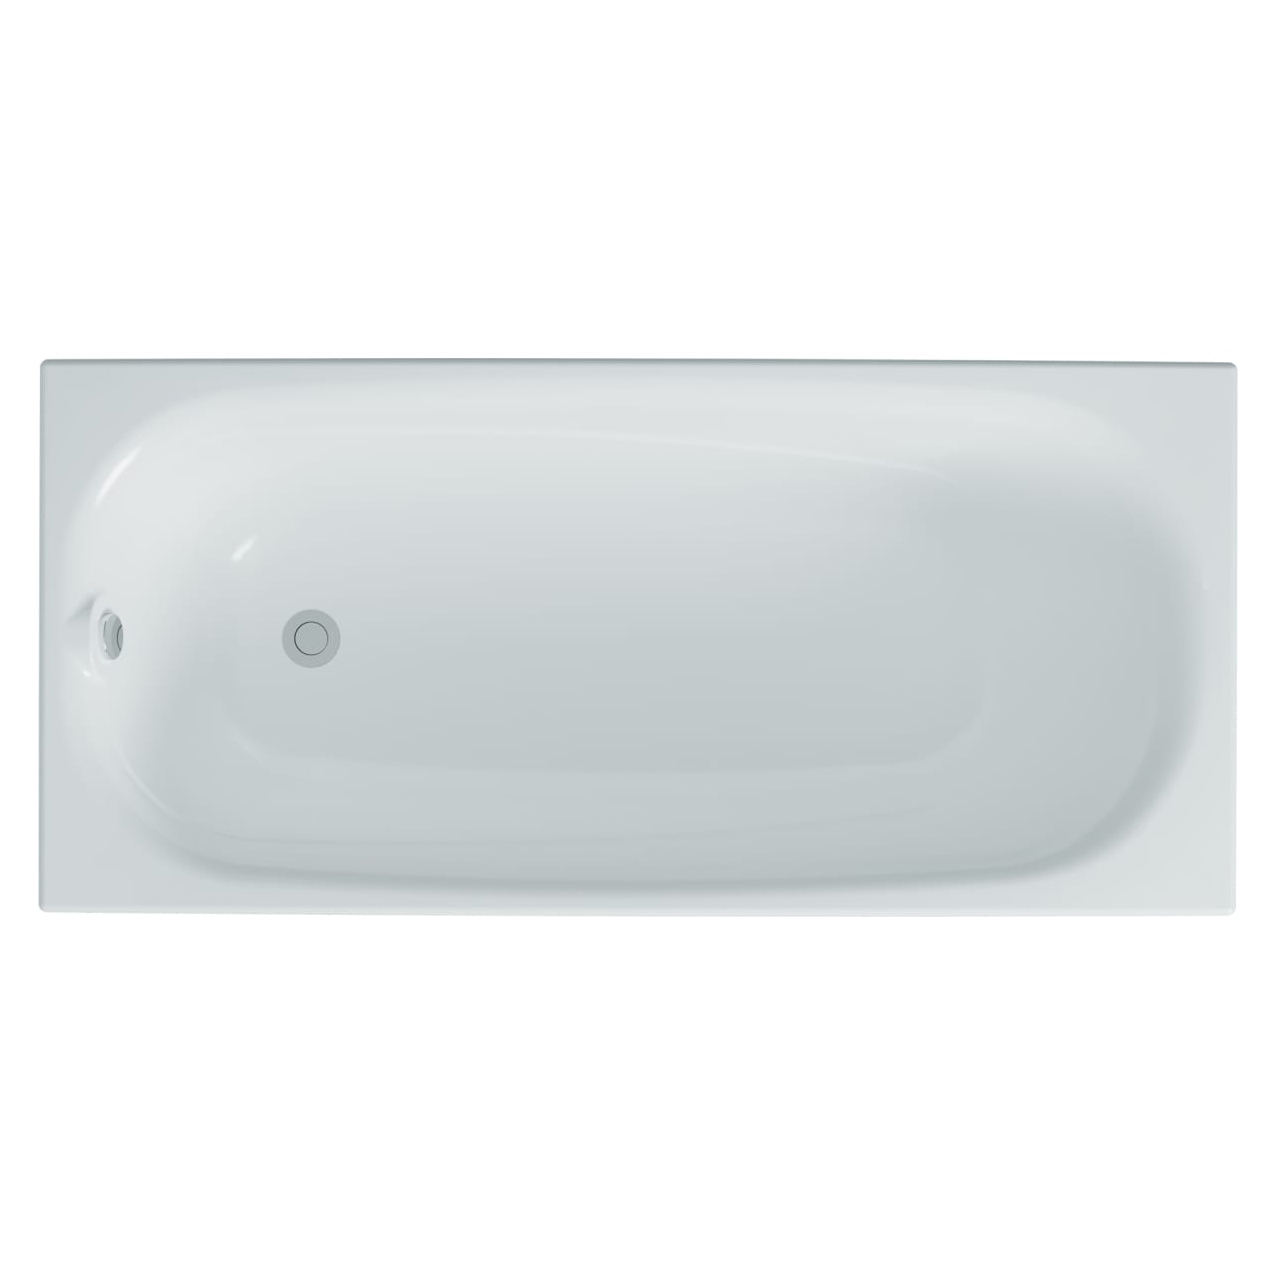 Акриловая ванна Тритон Европа 180х69.5 экран к ванне тритон gamma стандарт нерея ультра рига европа 150 щ0000050168